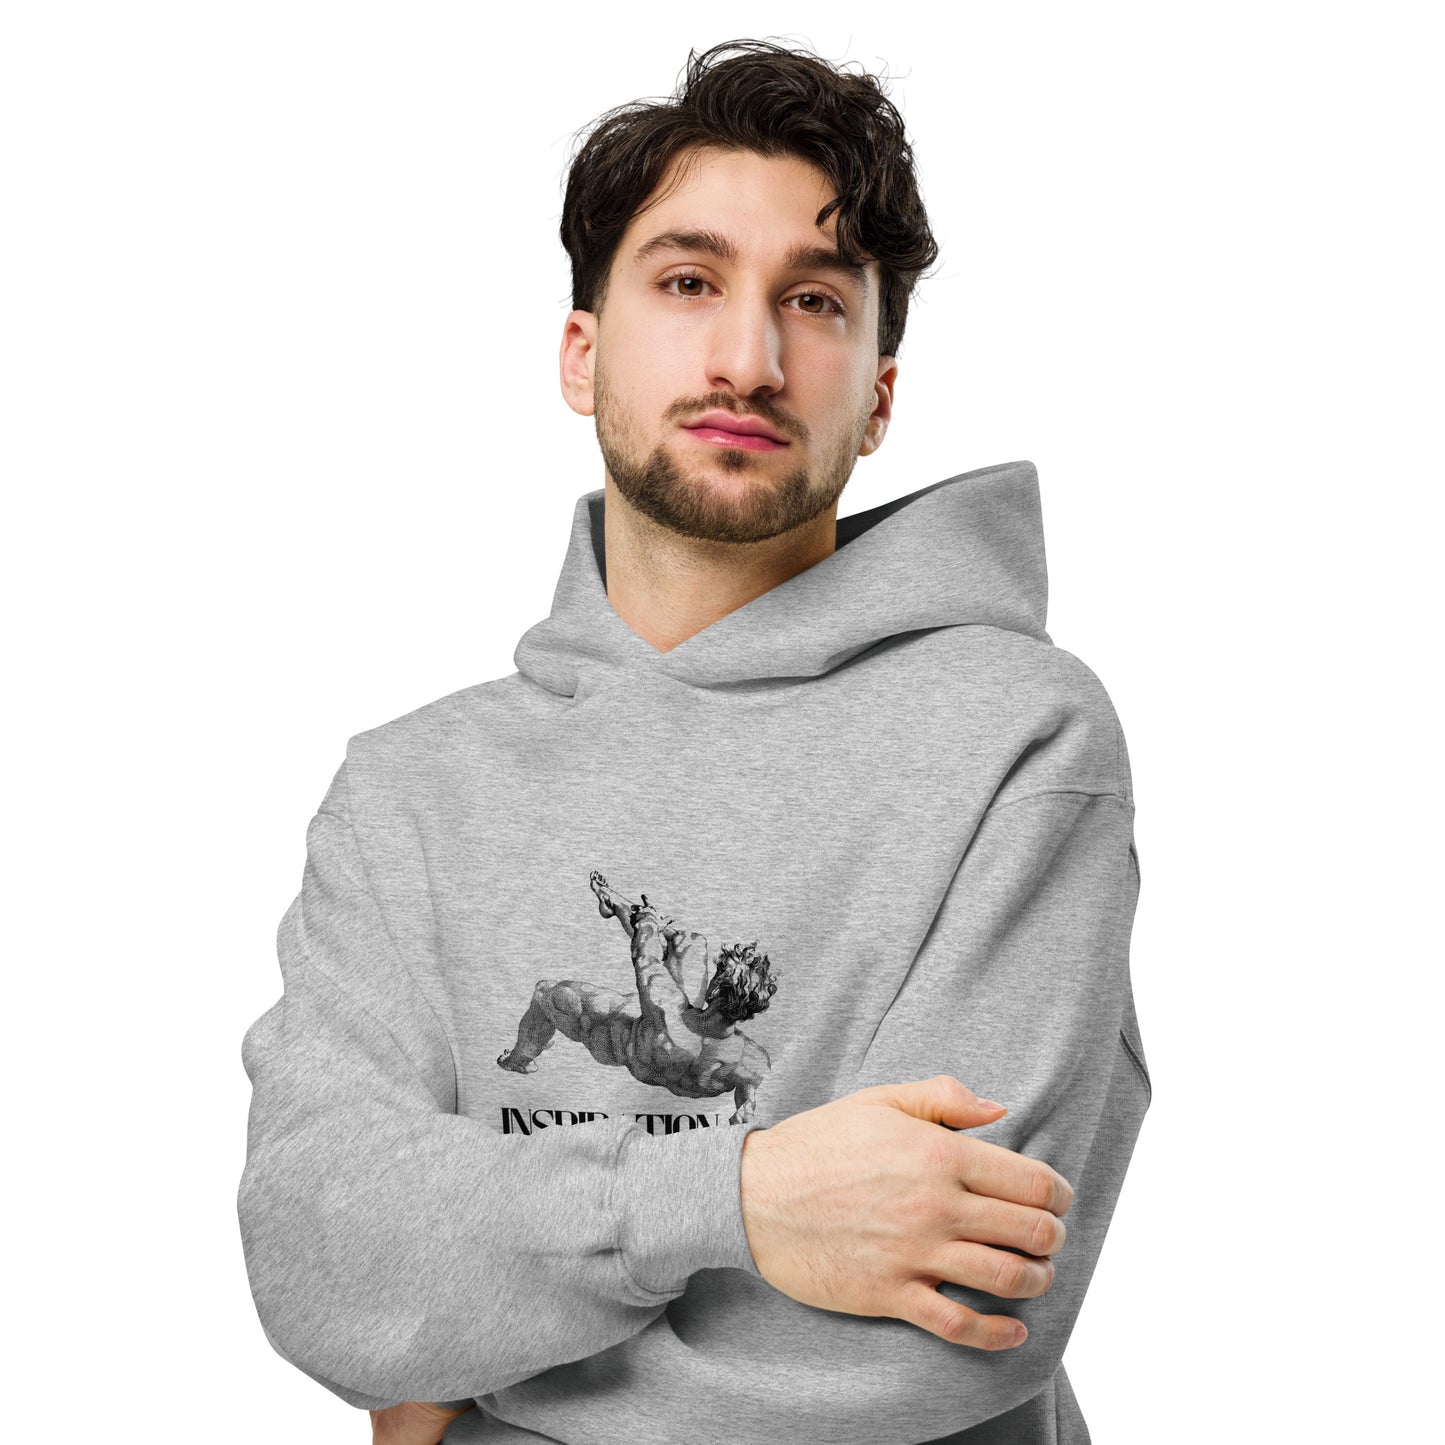 Inspiration Unisex oversized hoodie